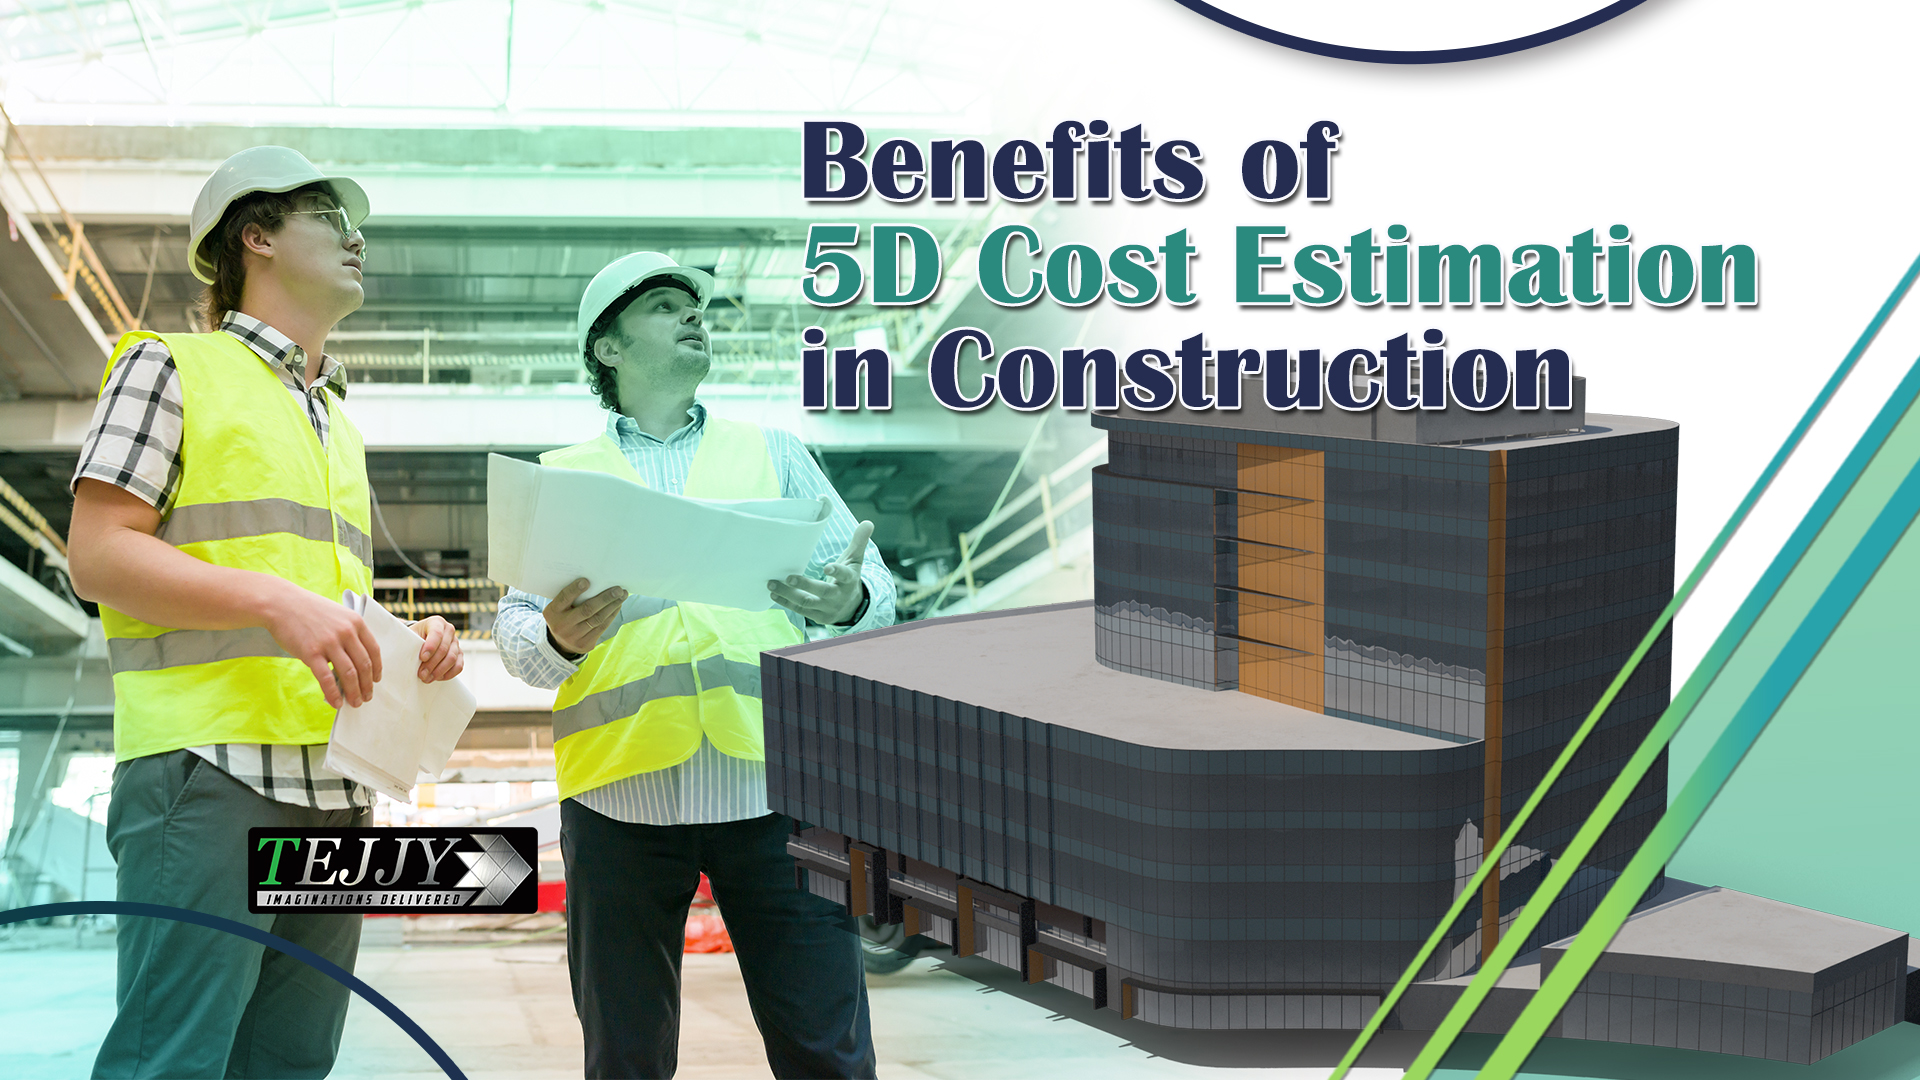 Benefits of 5D BIM Cost Estimation